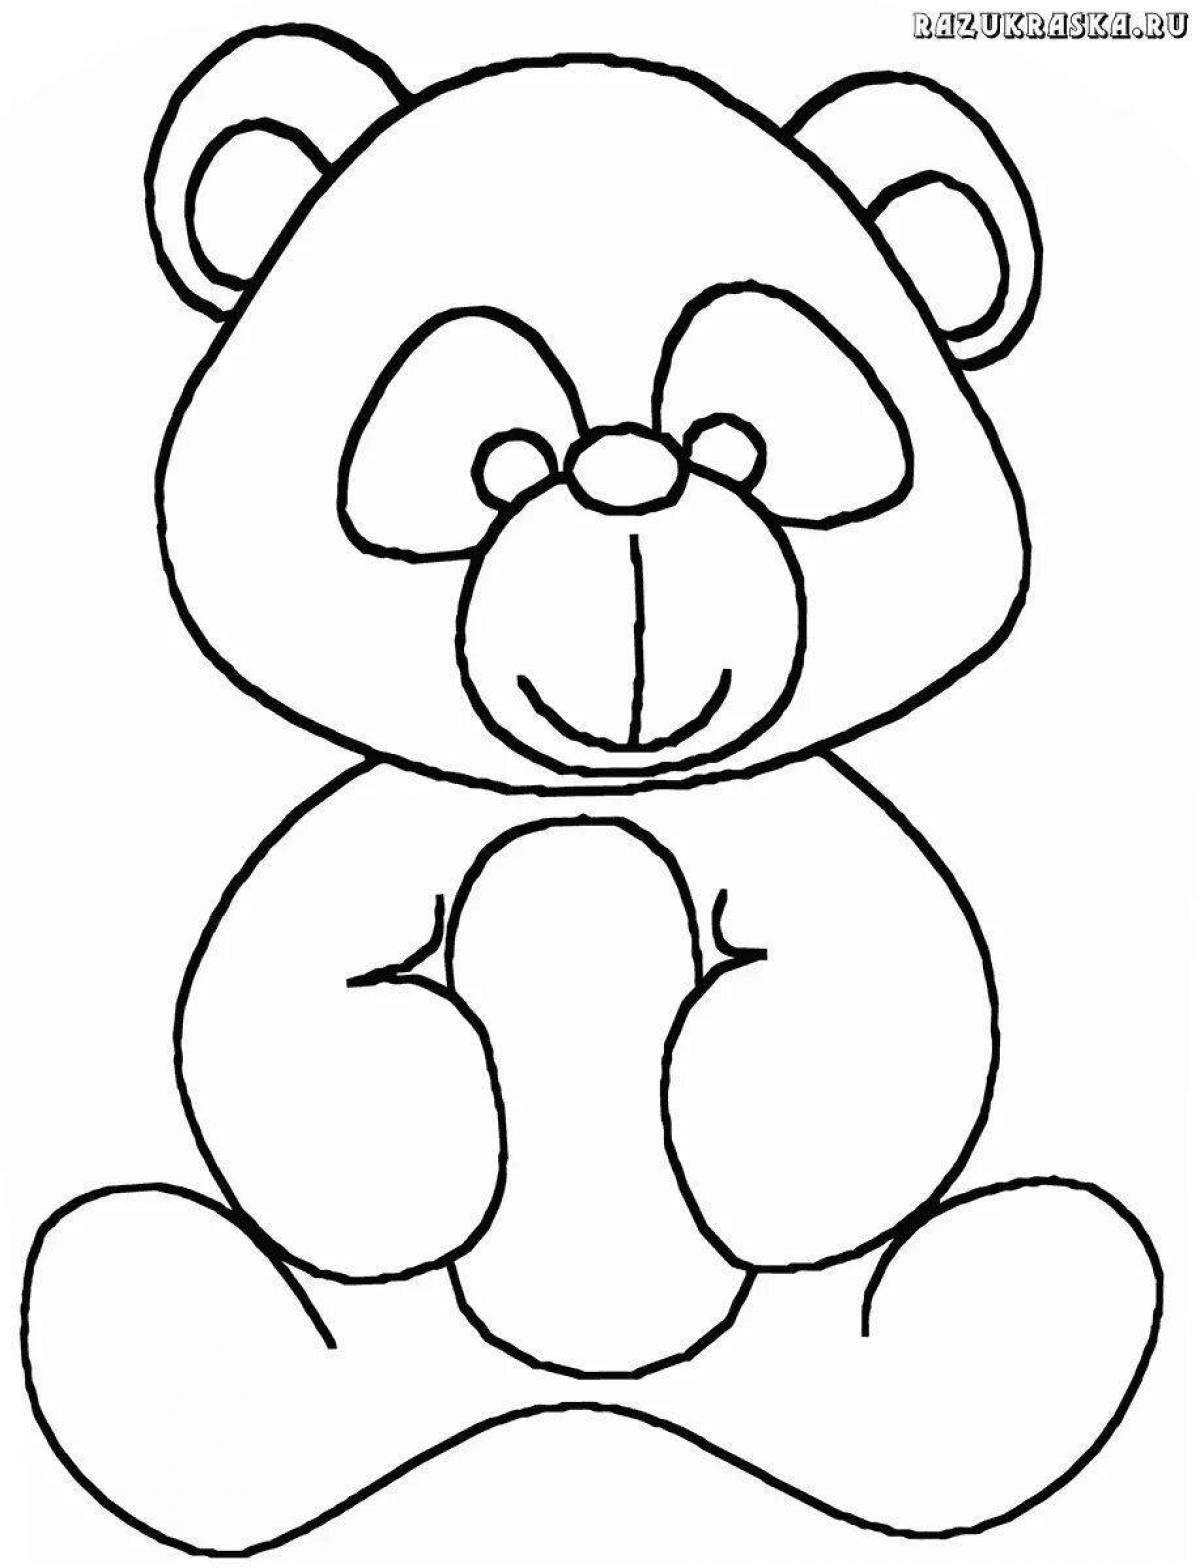 Joyful olympic bear coloring for kids